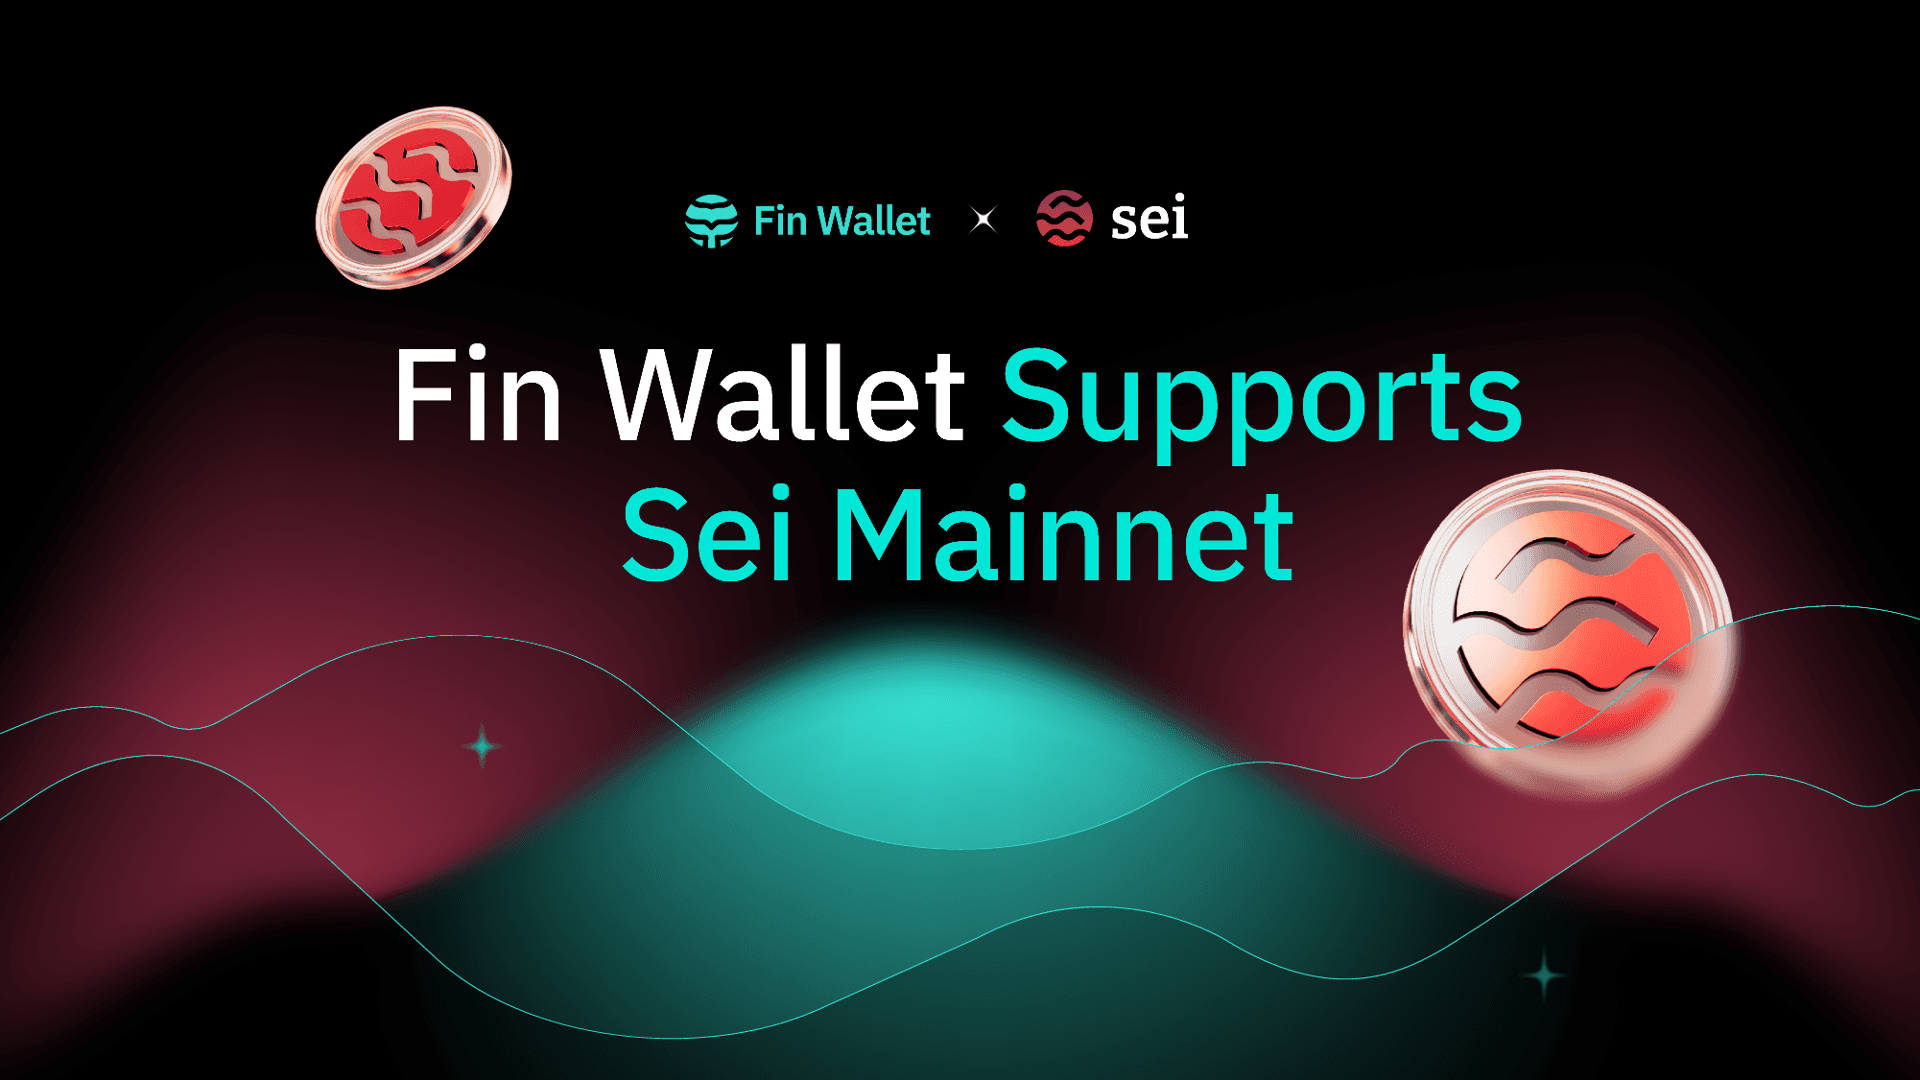 Fin Wallet is now integrating Sei Mainnet